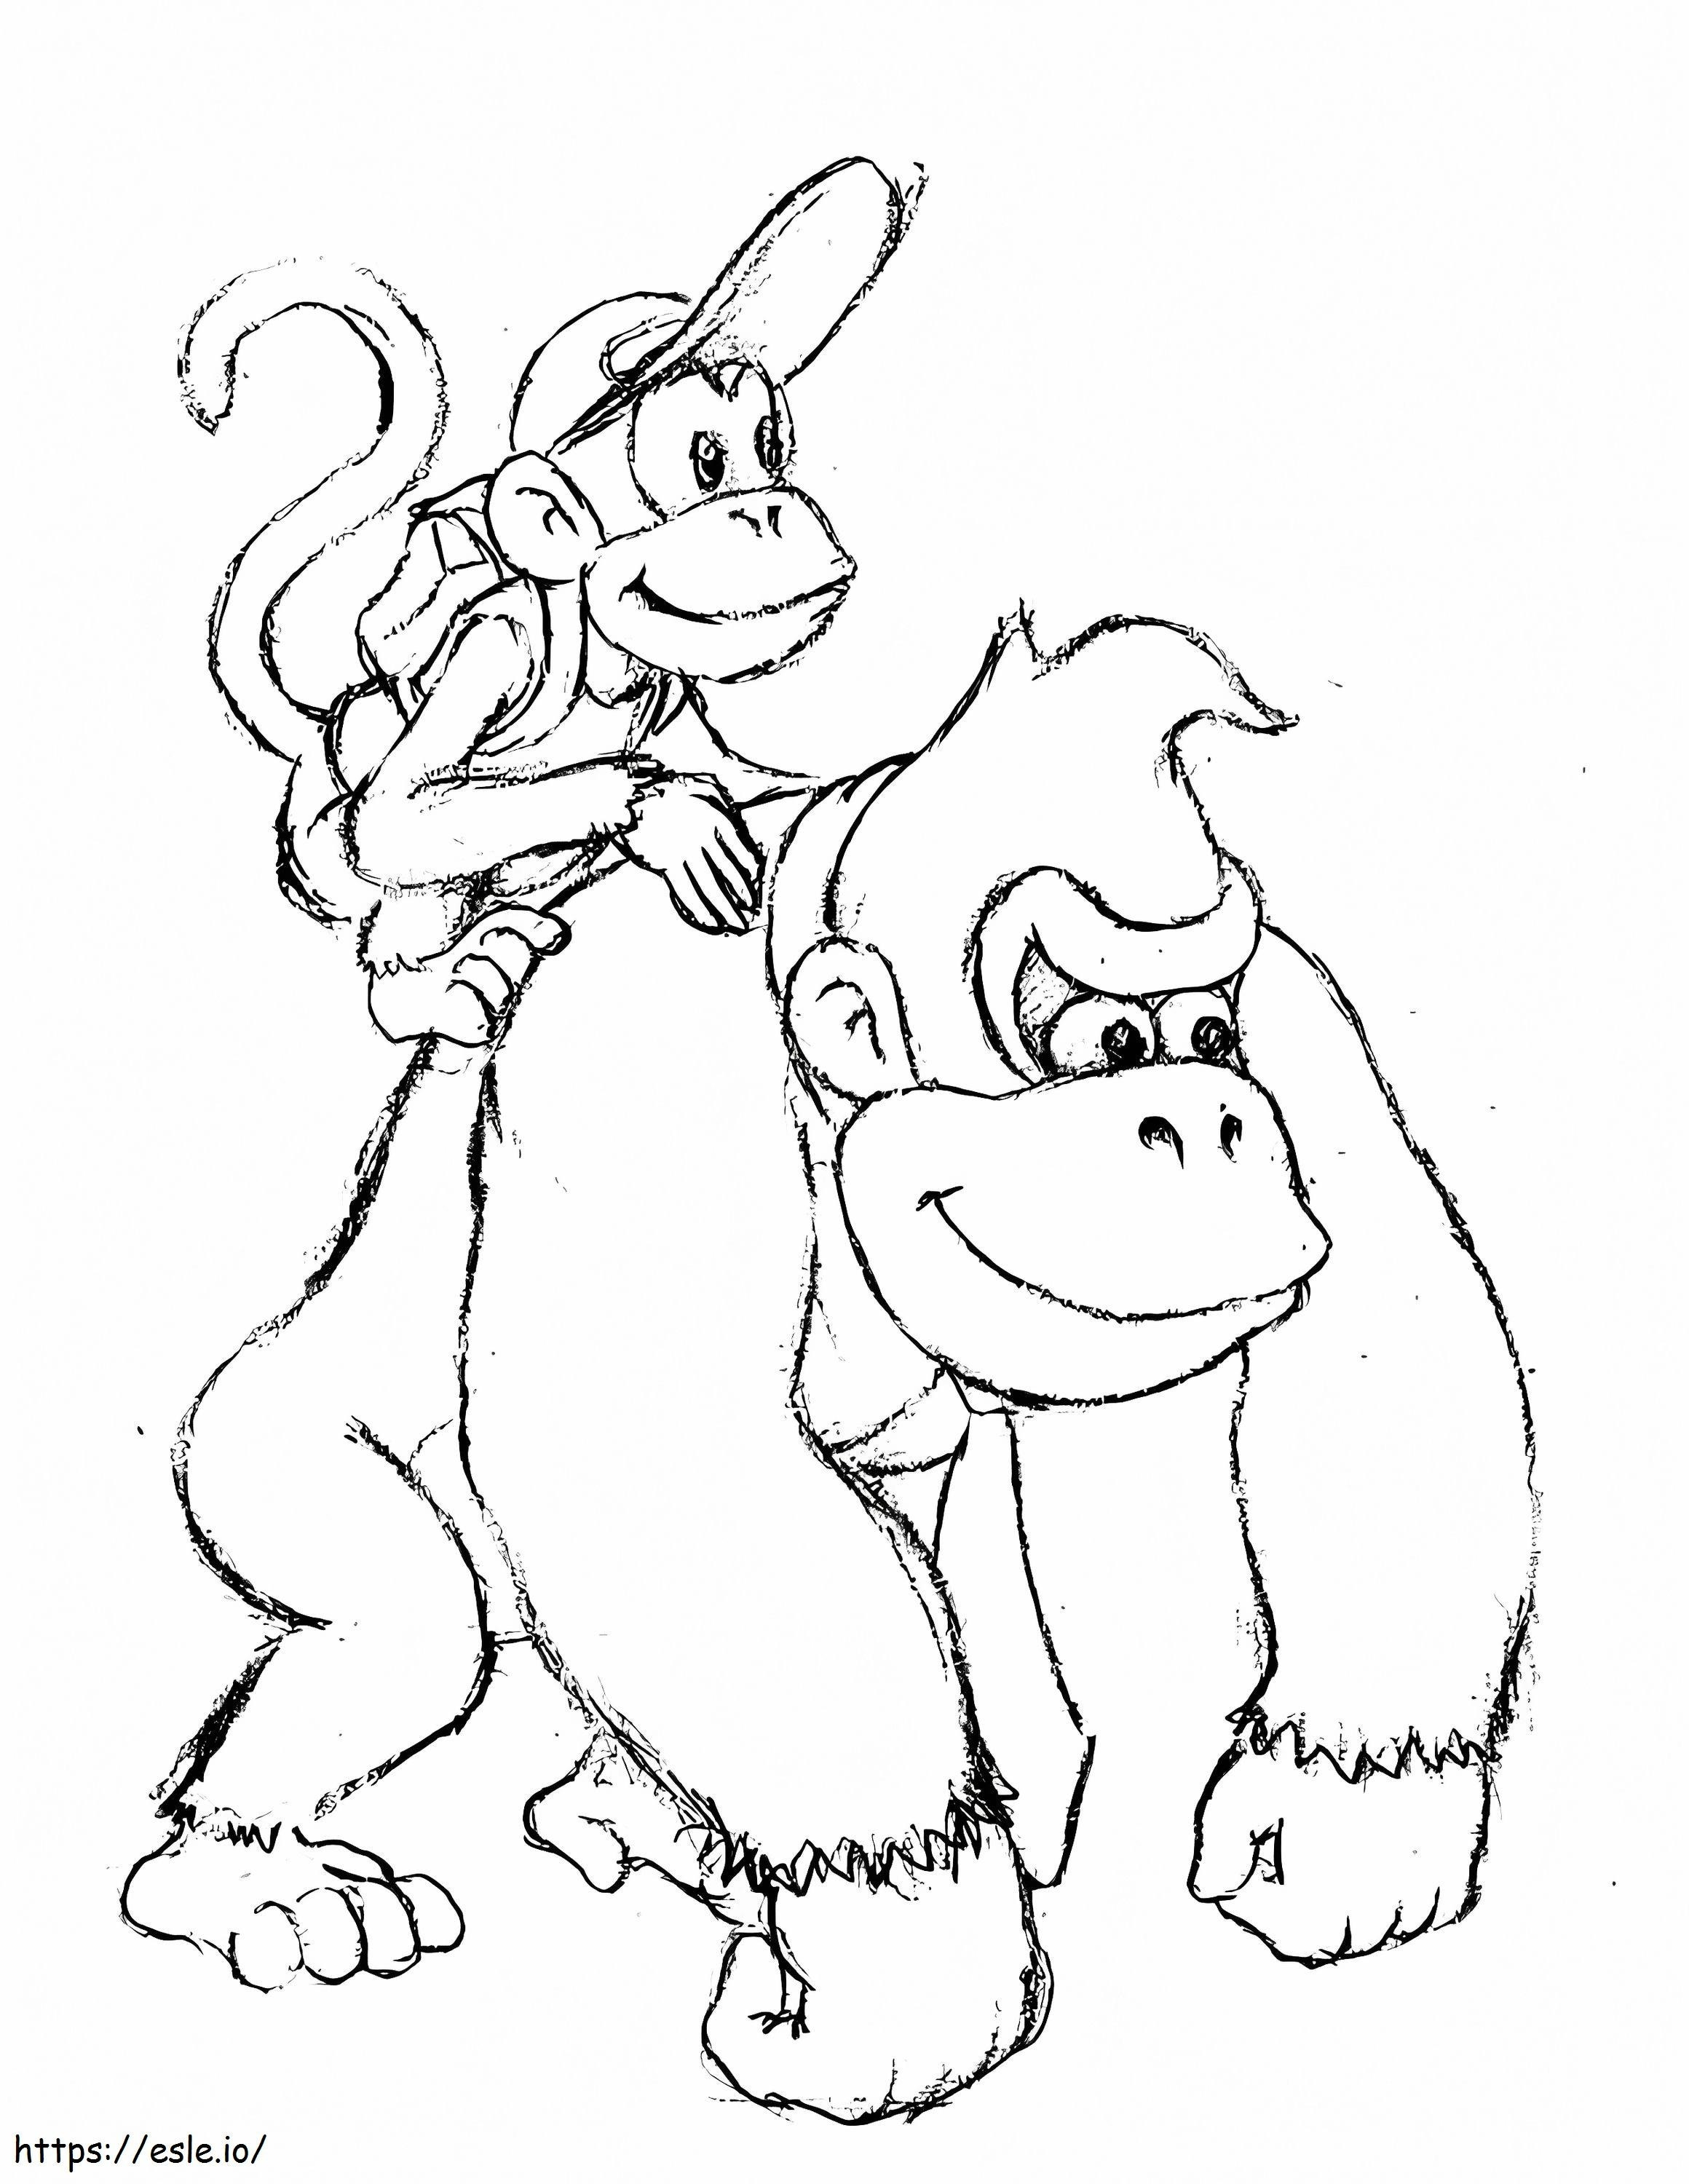 Diddy Kong Envelope Donkey Kong coloring page